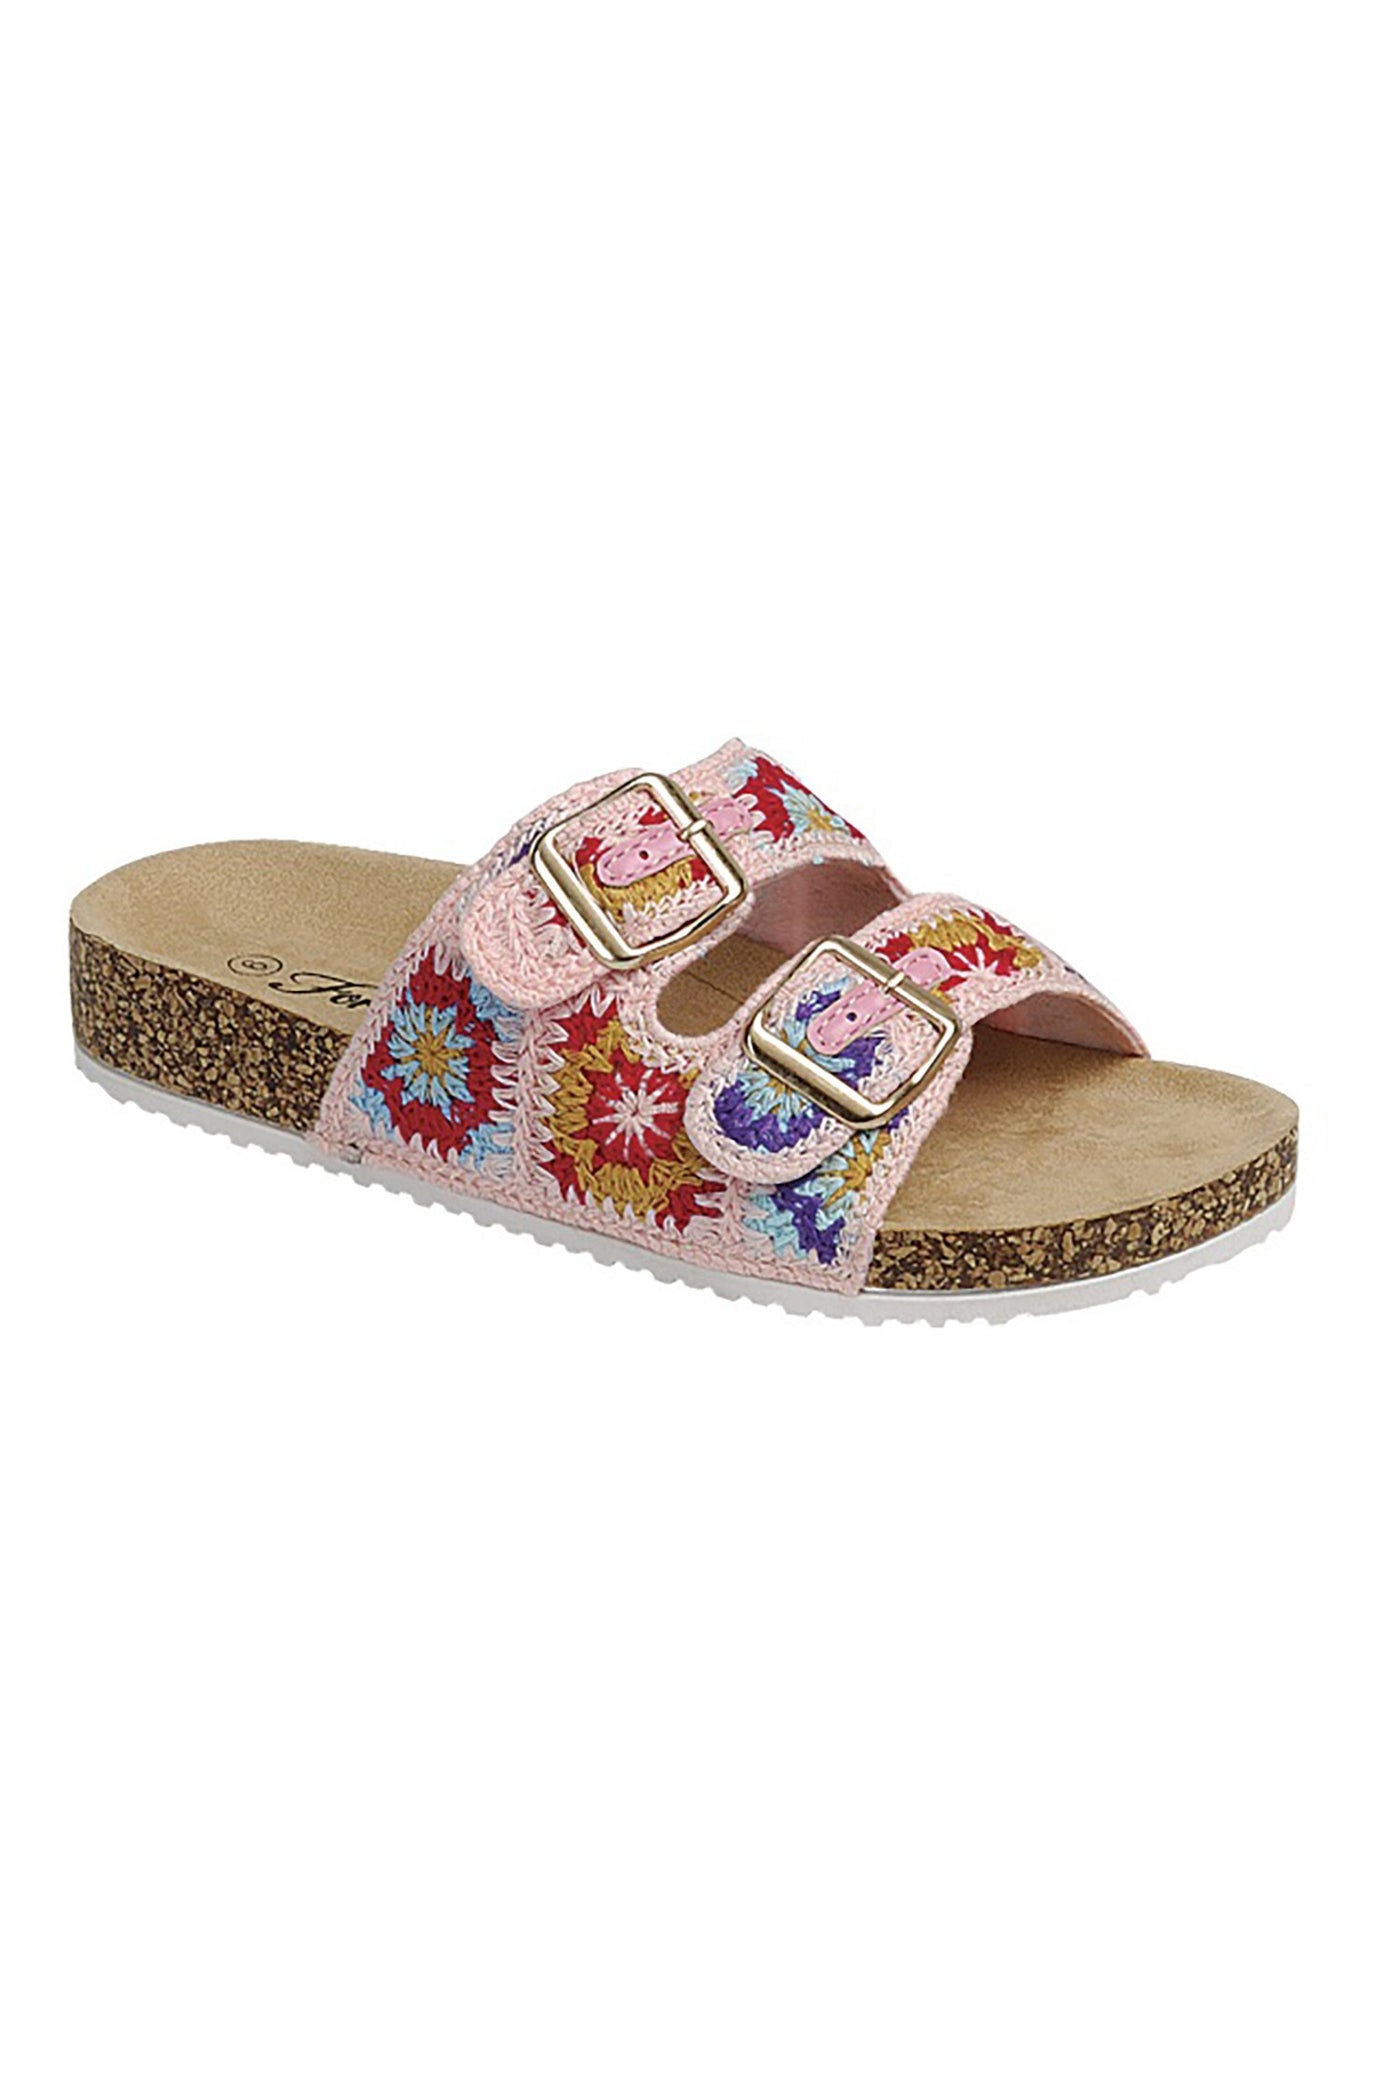 Crochet Sandals - Pink Multi